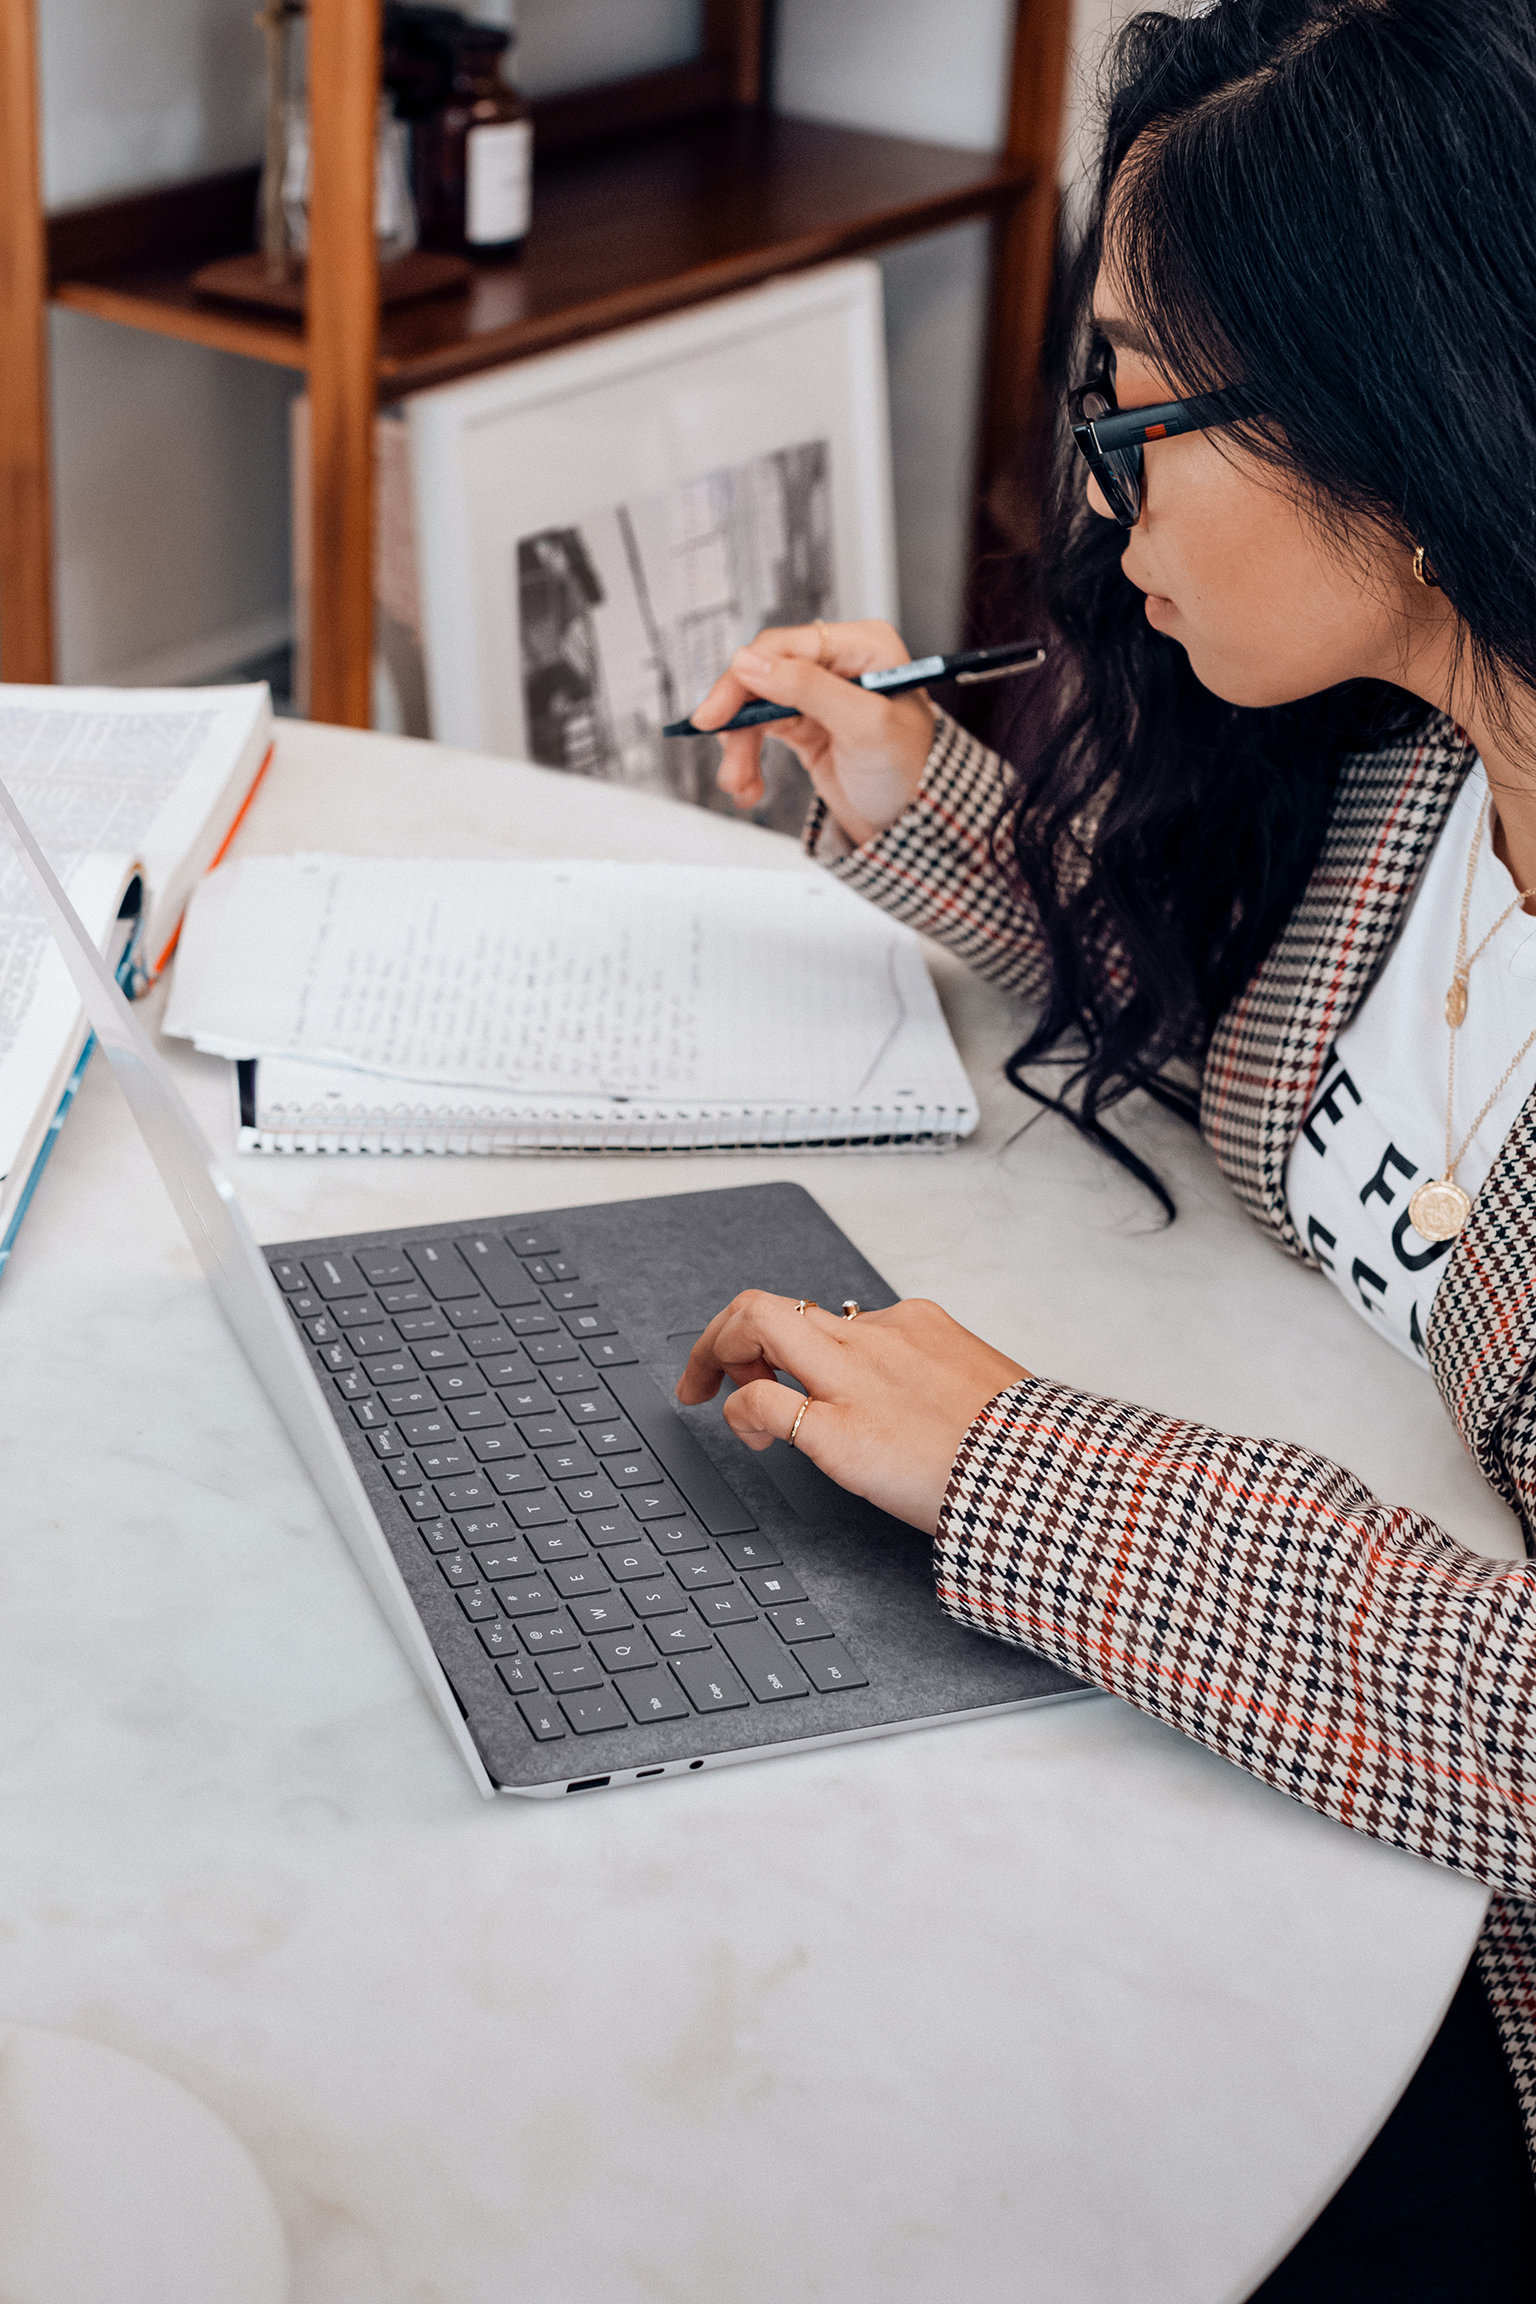 Woman working at laptop, writing notes